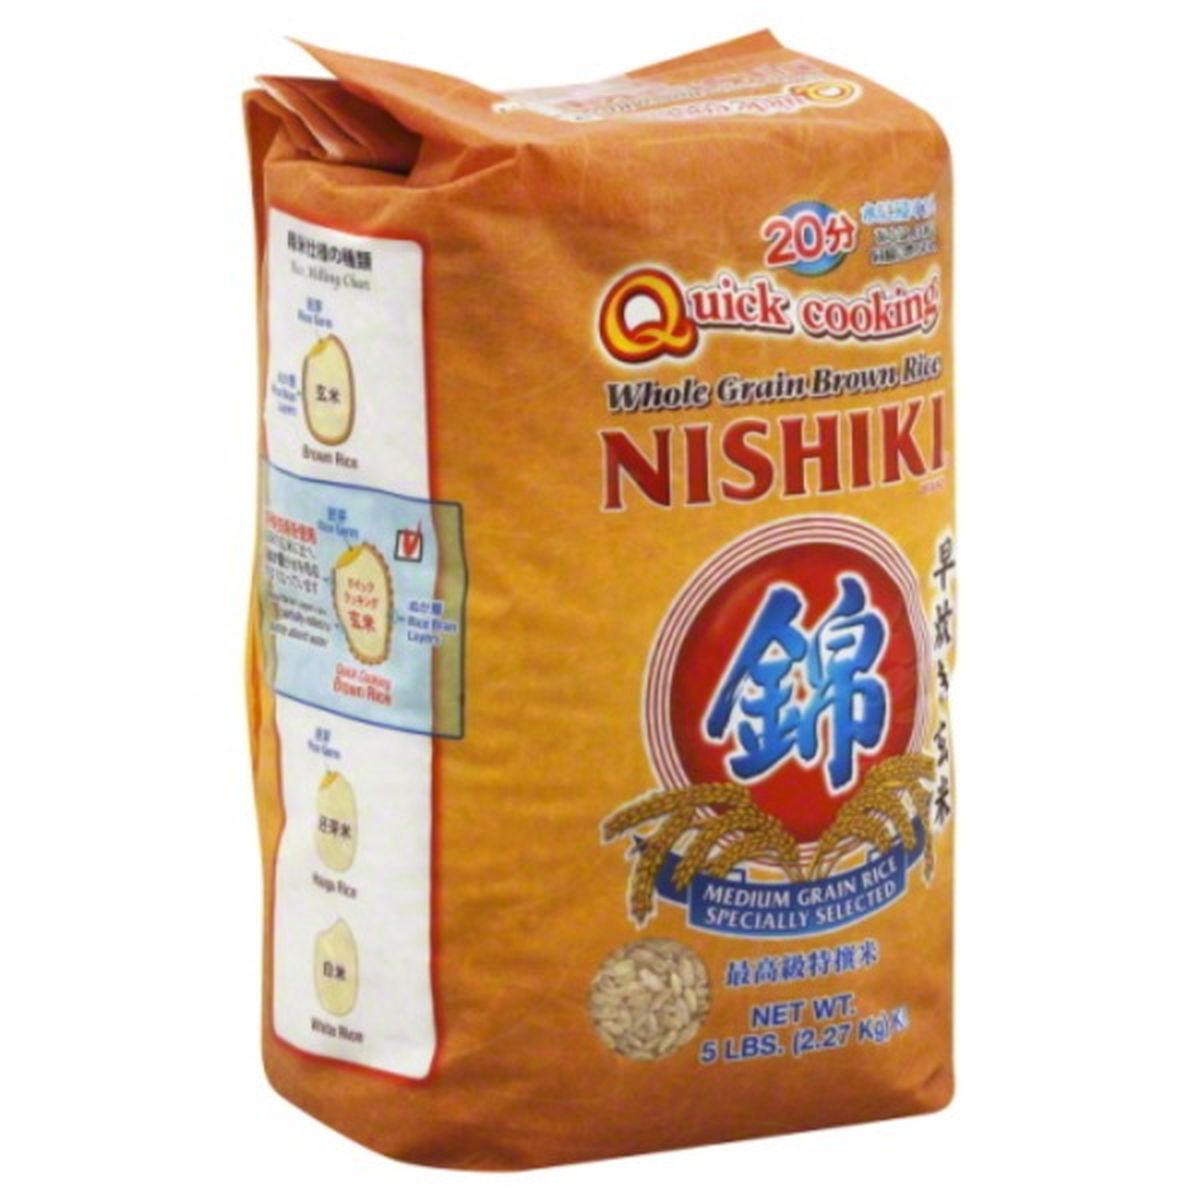 Calories in Nishiki Brown Rice, Whole Grain